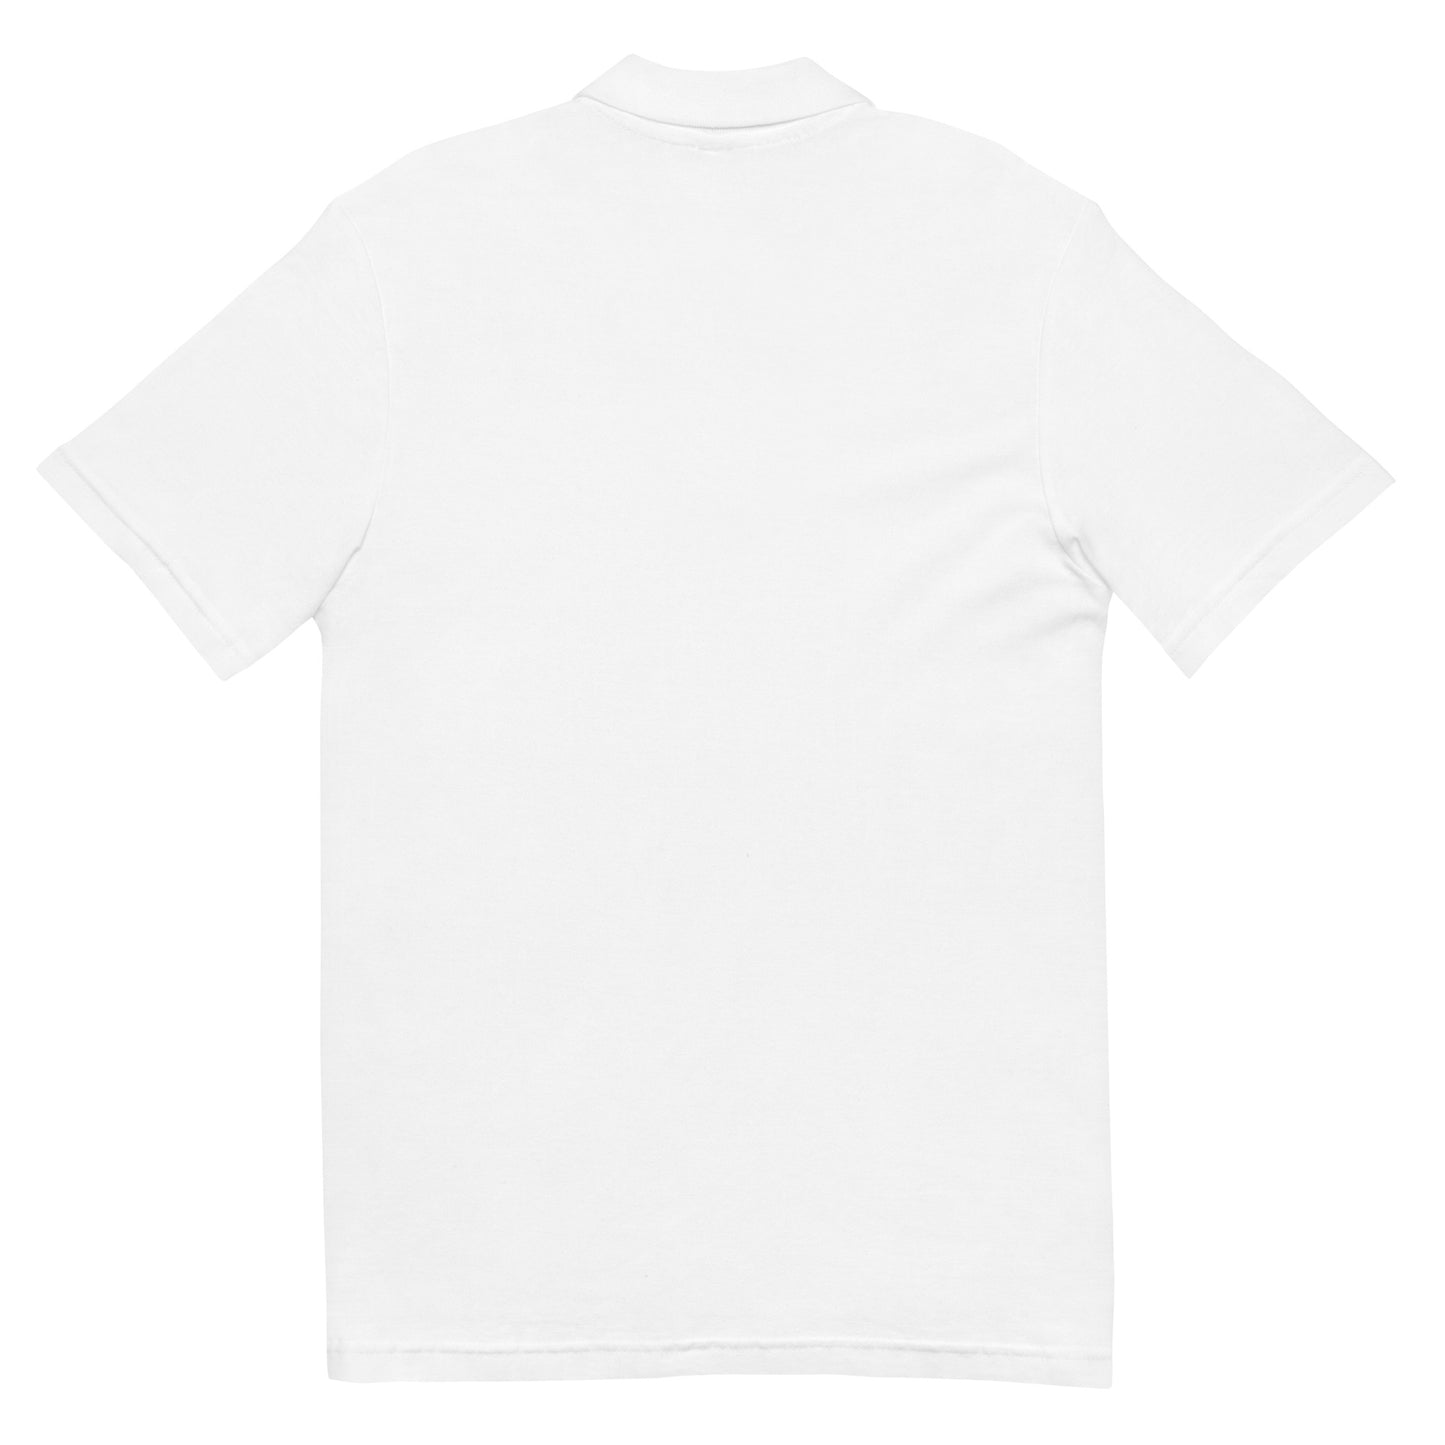 Culture Media polo shirt (White)